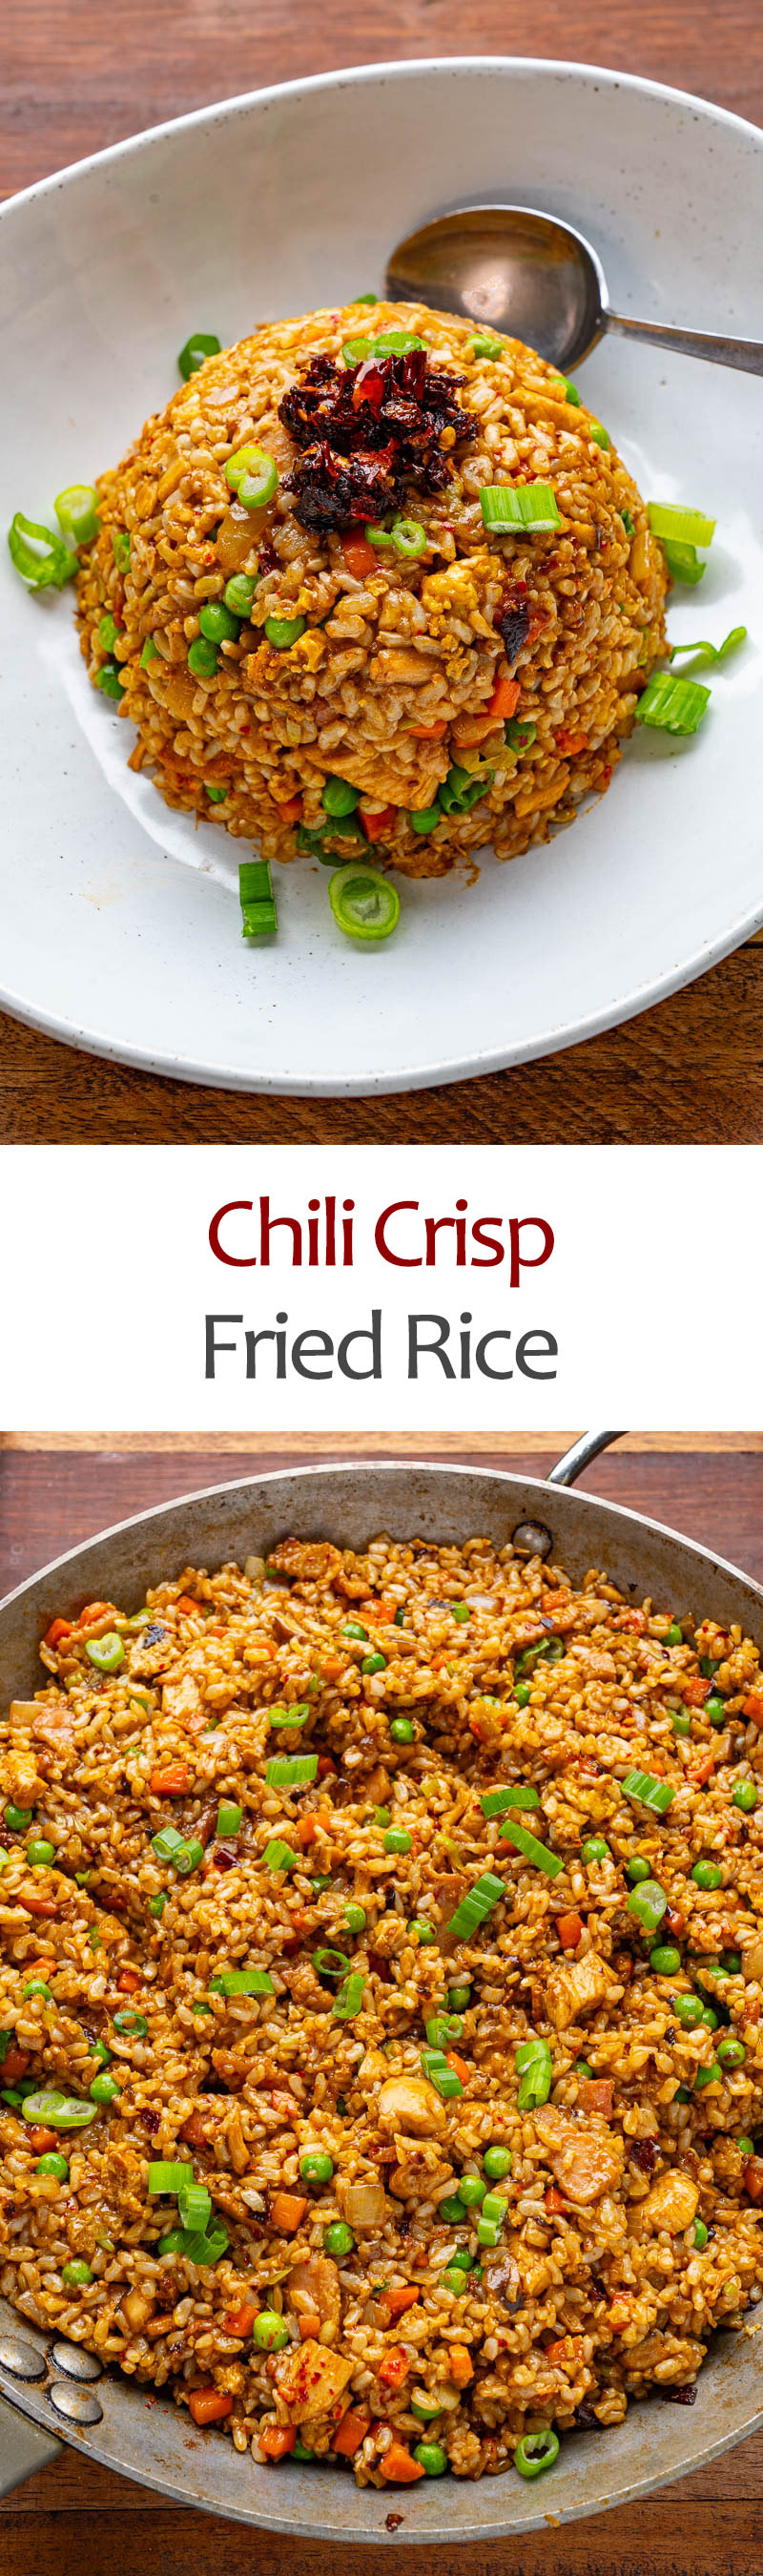 Chili Crisp Fried Rice